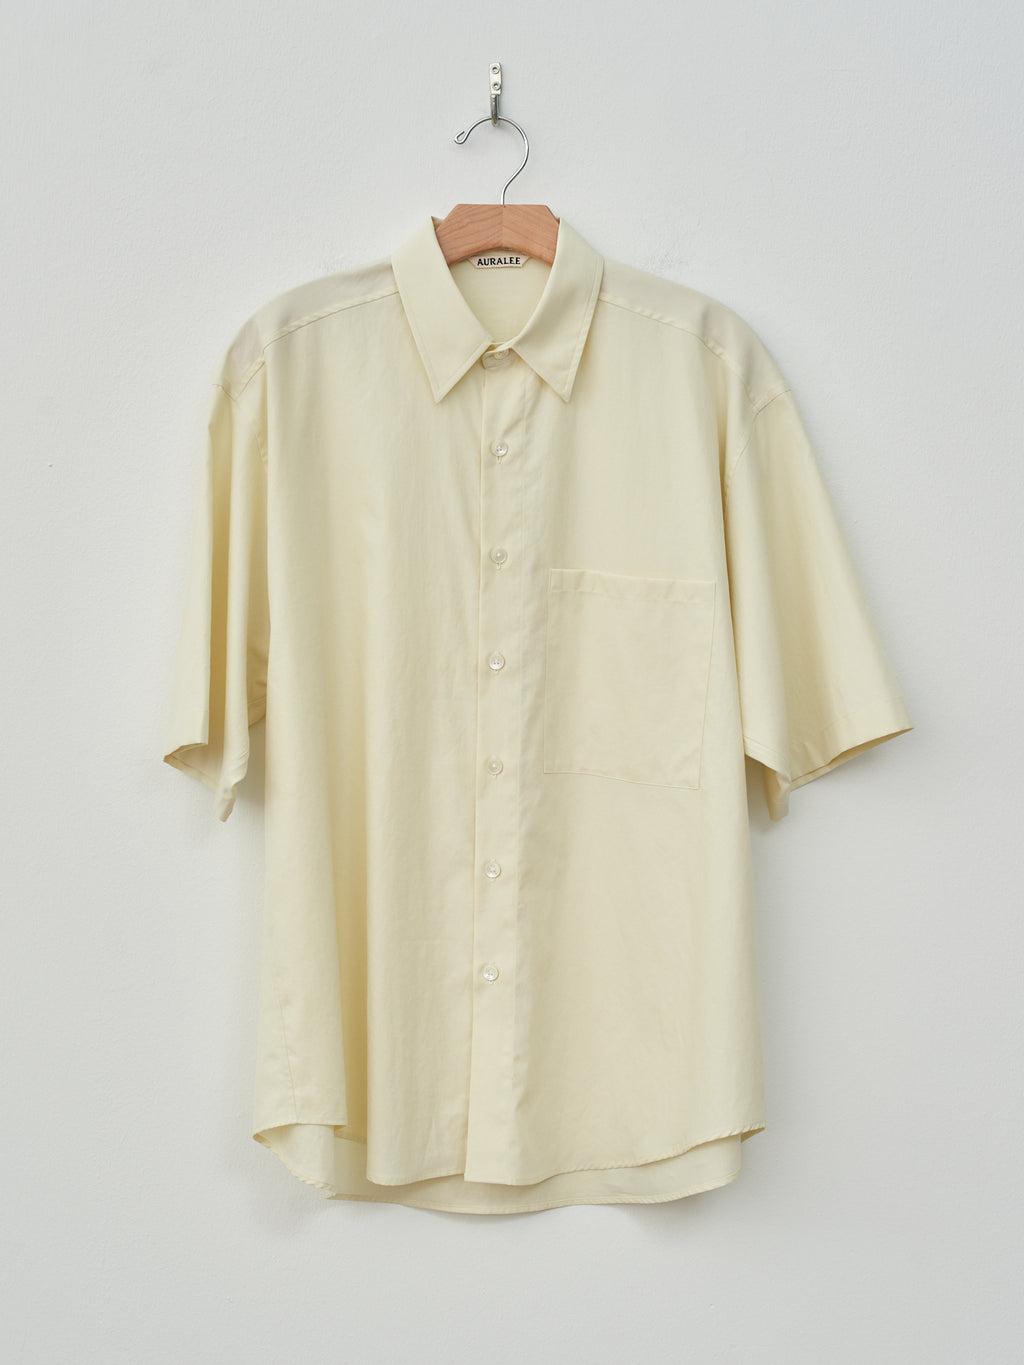 Namu Shop - Auralee Washed Finx Twill Big Half Sleeved Shirt - Light Yellow